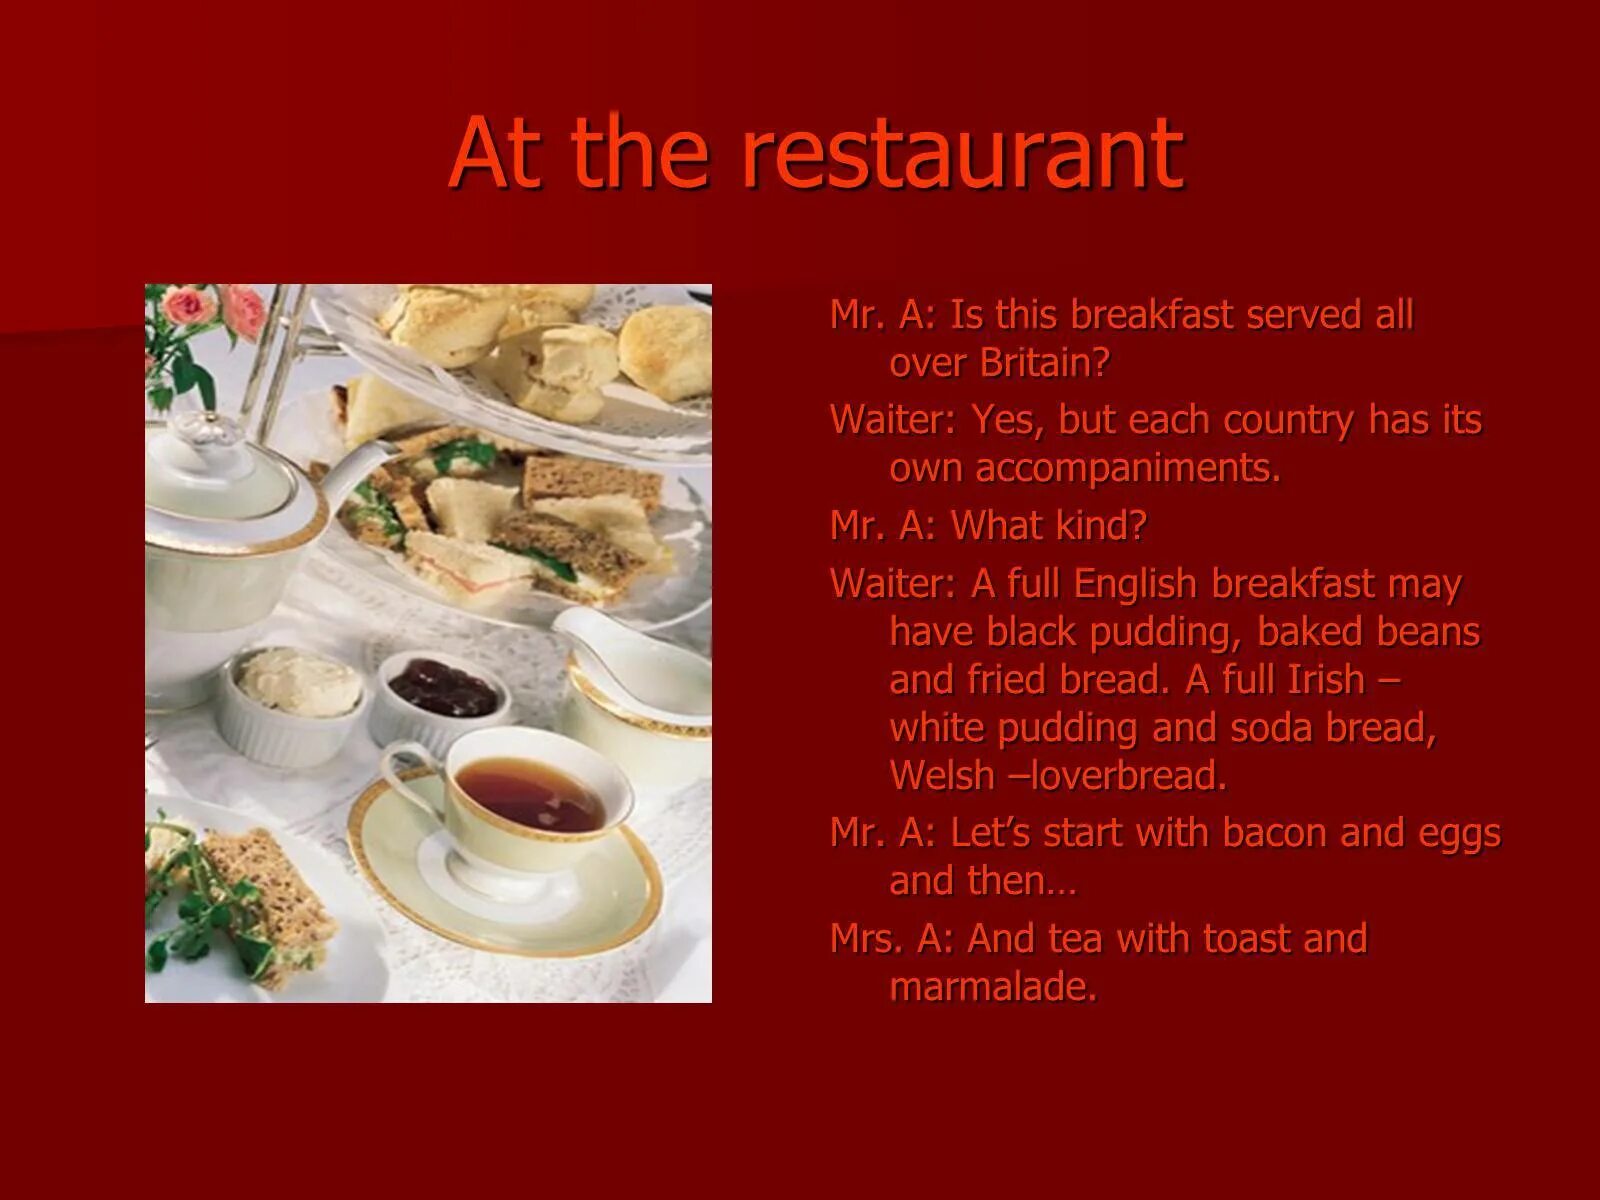 Отзыв о ресторане на английском. Ресторан в Англии для презентации. Презентация еды в ресторане на английском. Тема ресторан на английском языке. Презентация на тему еда на английском.